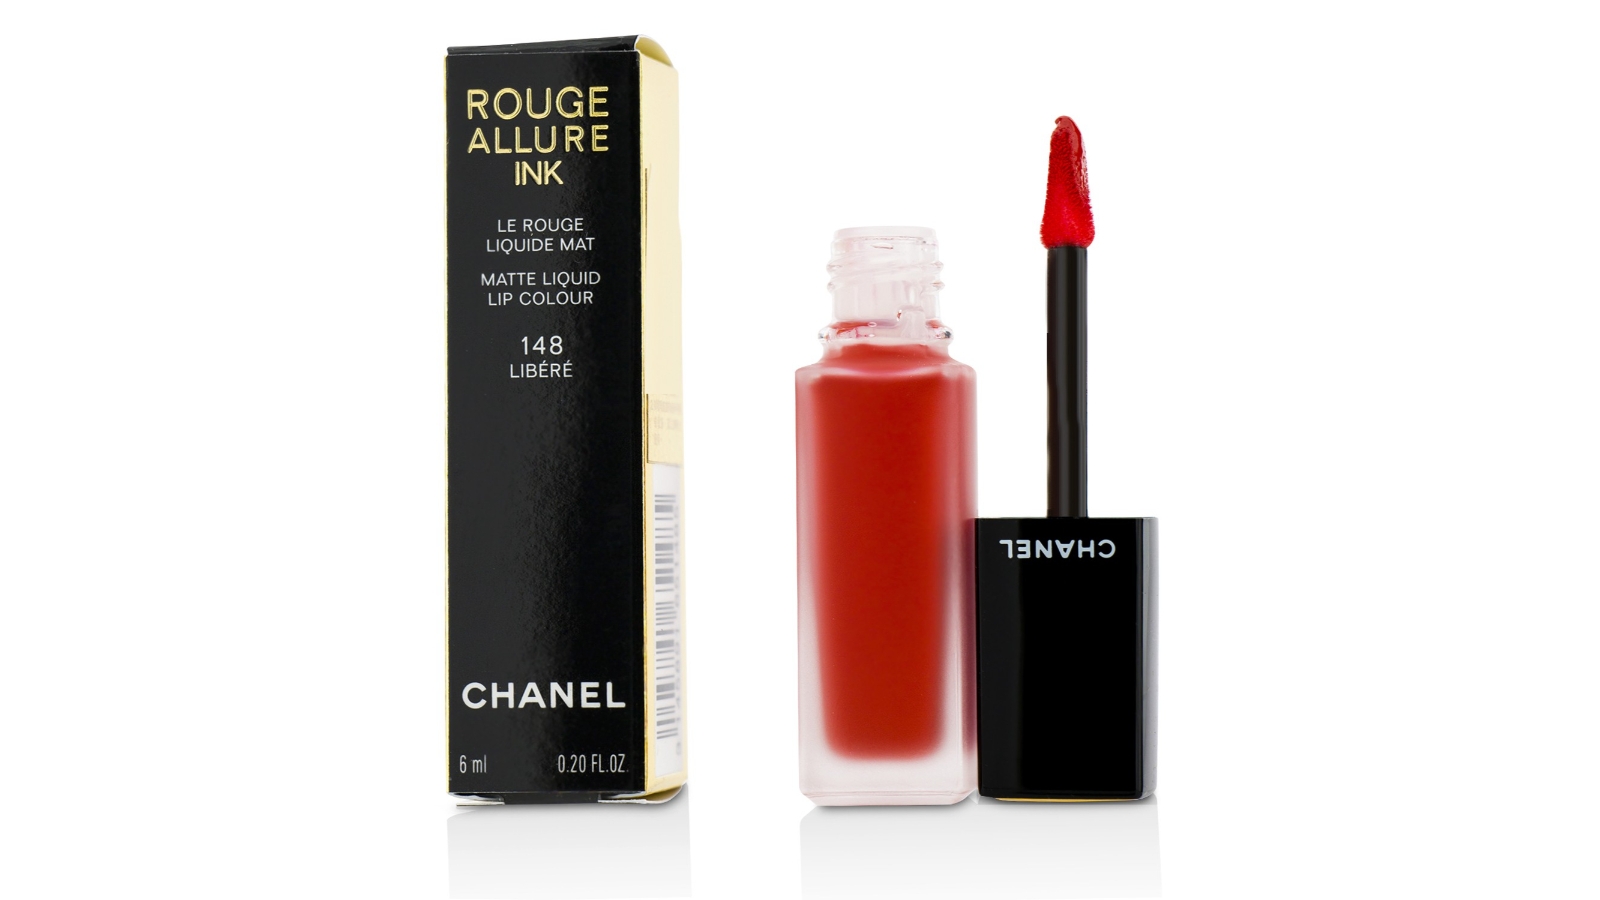 Chanel Lipsticks